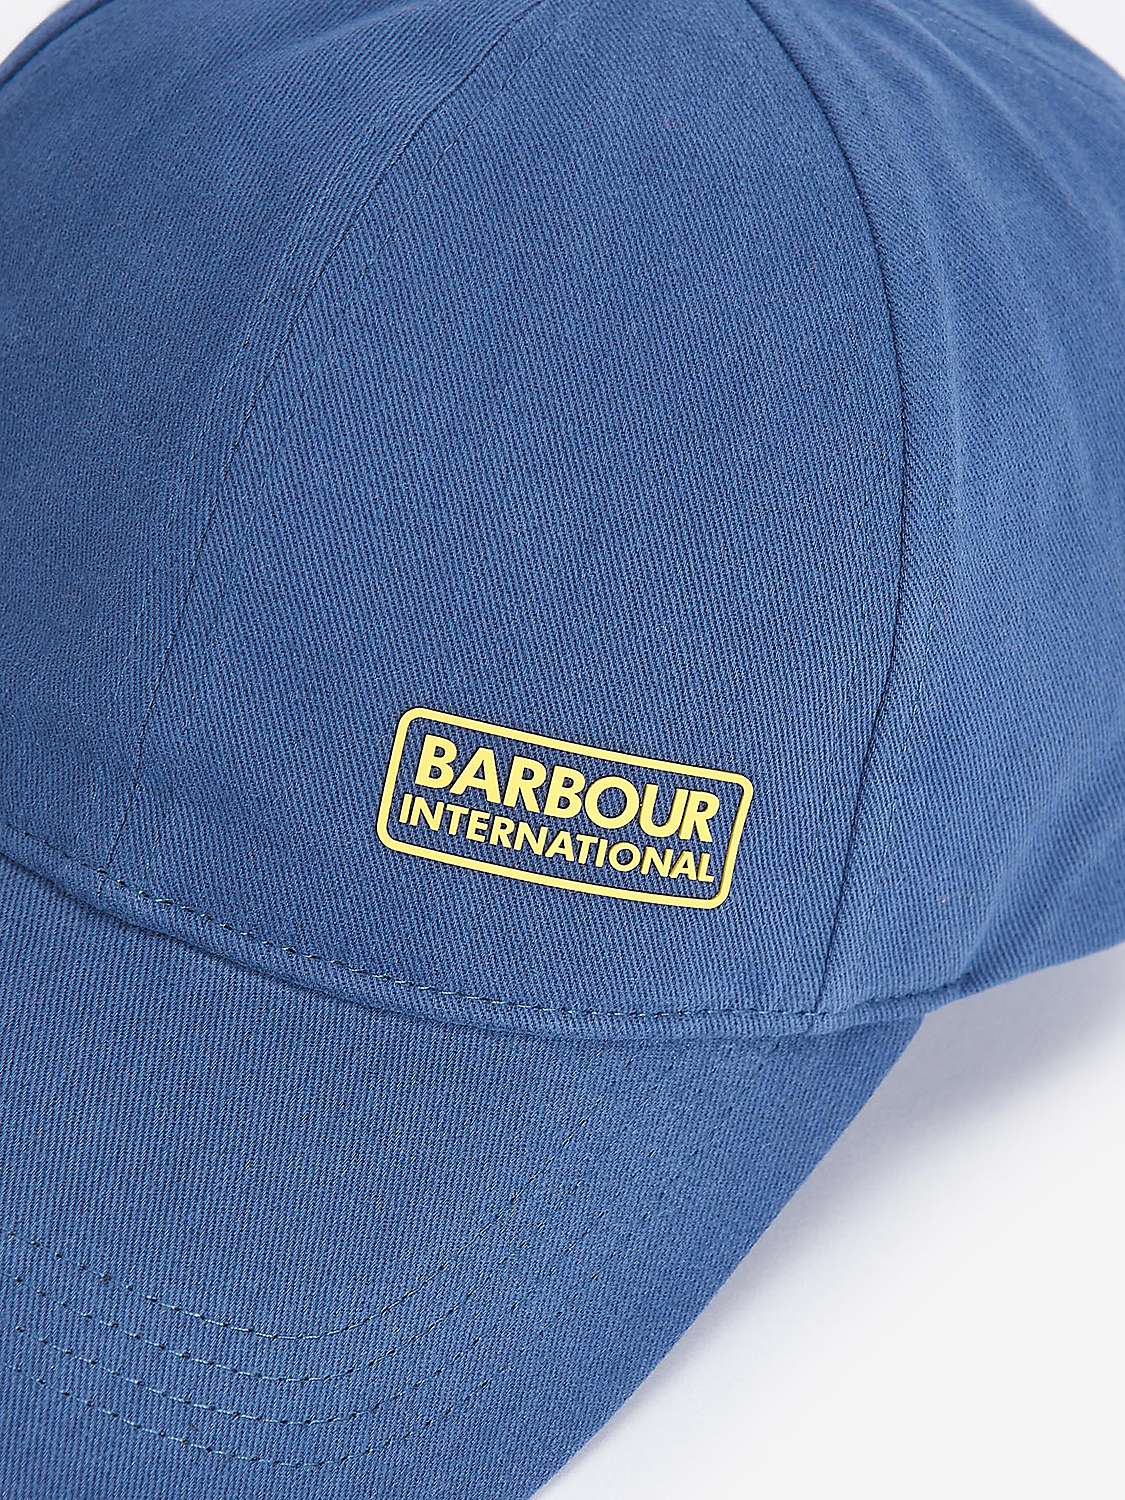 Buy Barbour International Norton Sports Baseball Cap, Washed Cobalt Online at johnlewis.com